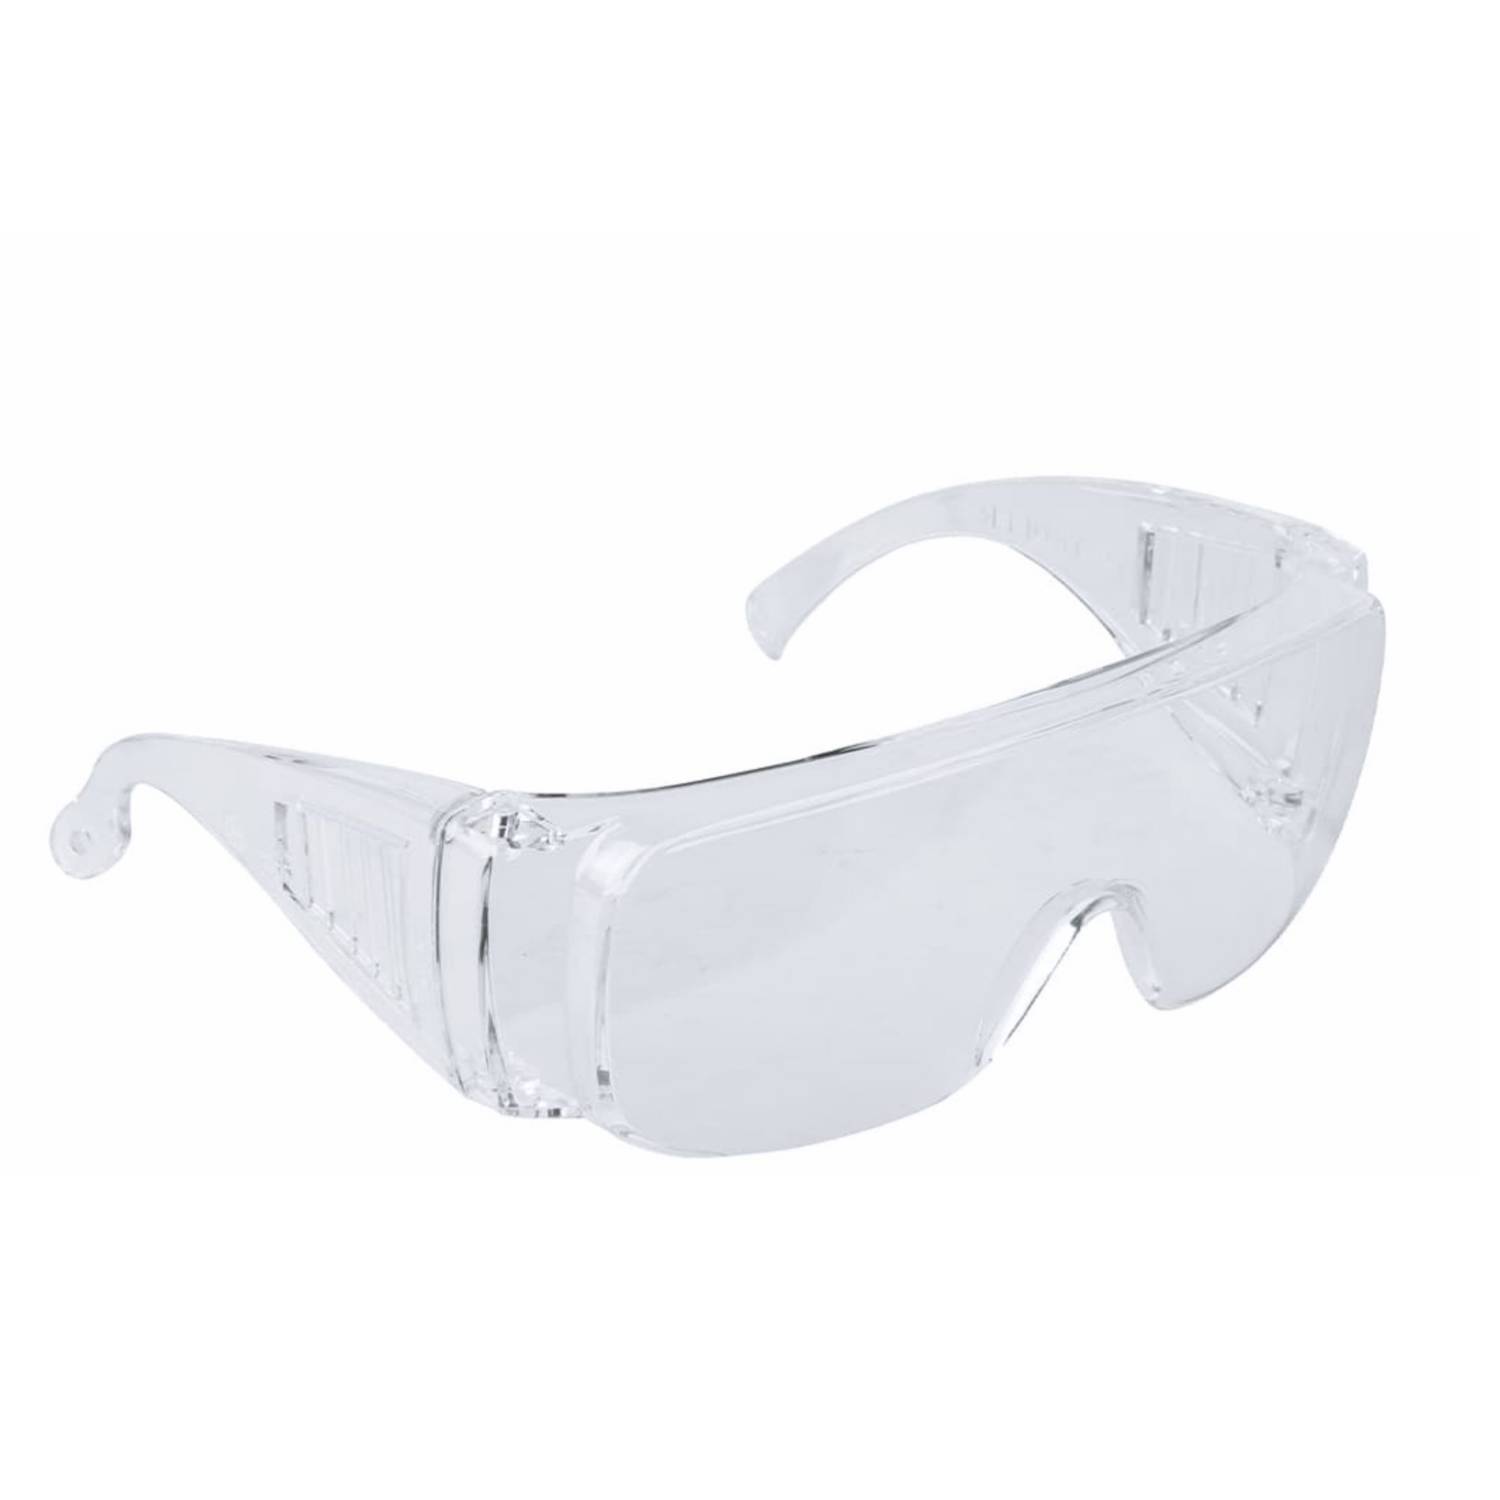 Sobrelentes de seguridad transparentes, Truper Safe, Lentes y Goggles, 14308